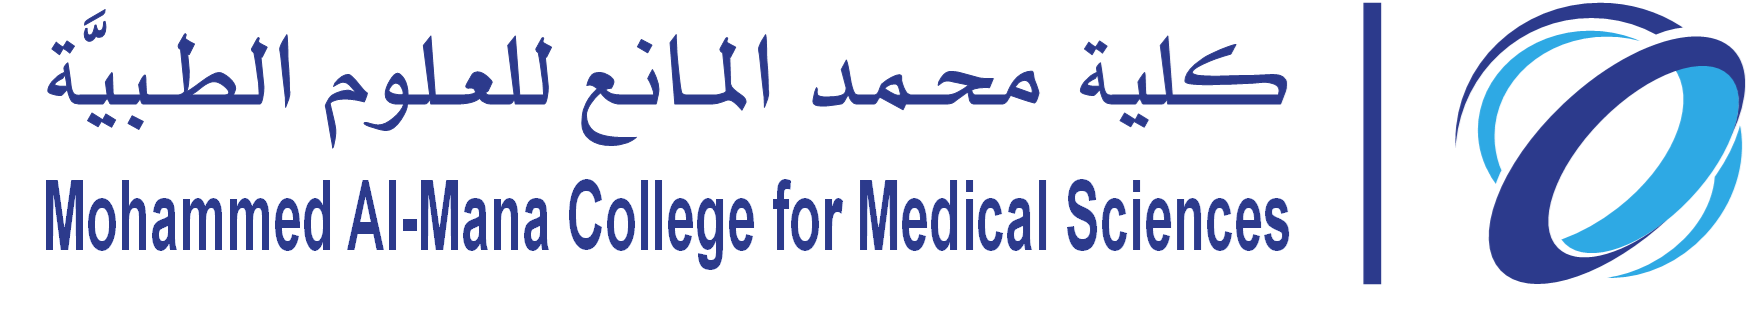 Mohammed Al-Mana College for Medical Sciences Saudi Arabia